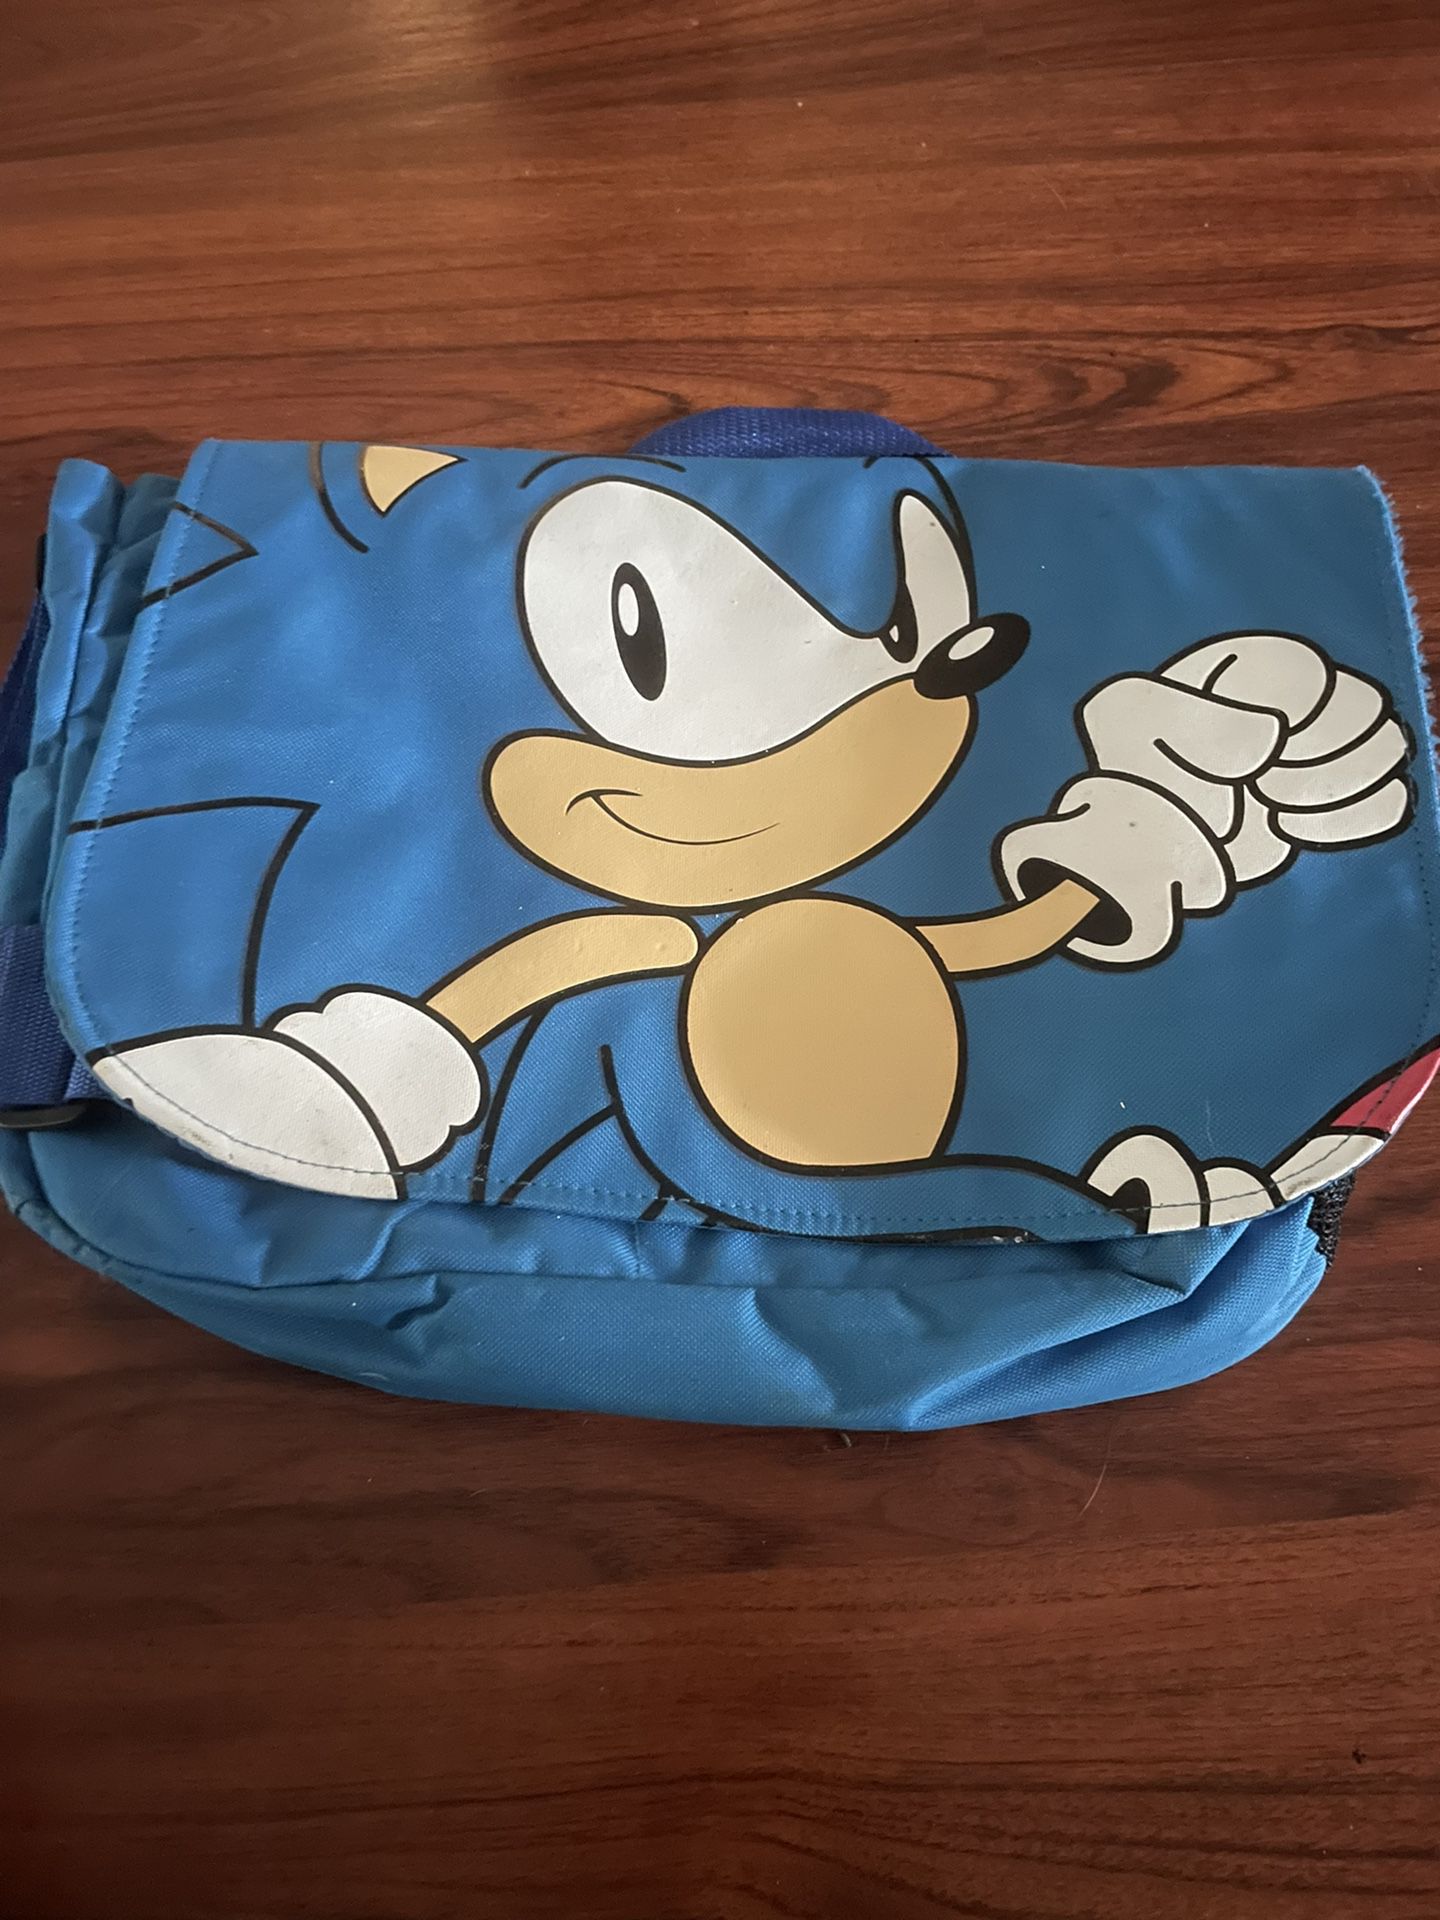 Sonic The Hedgehog bag